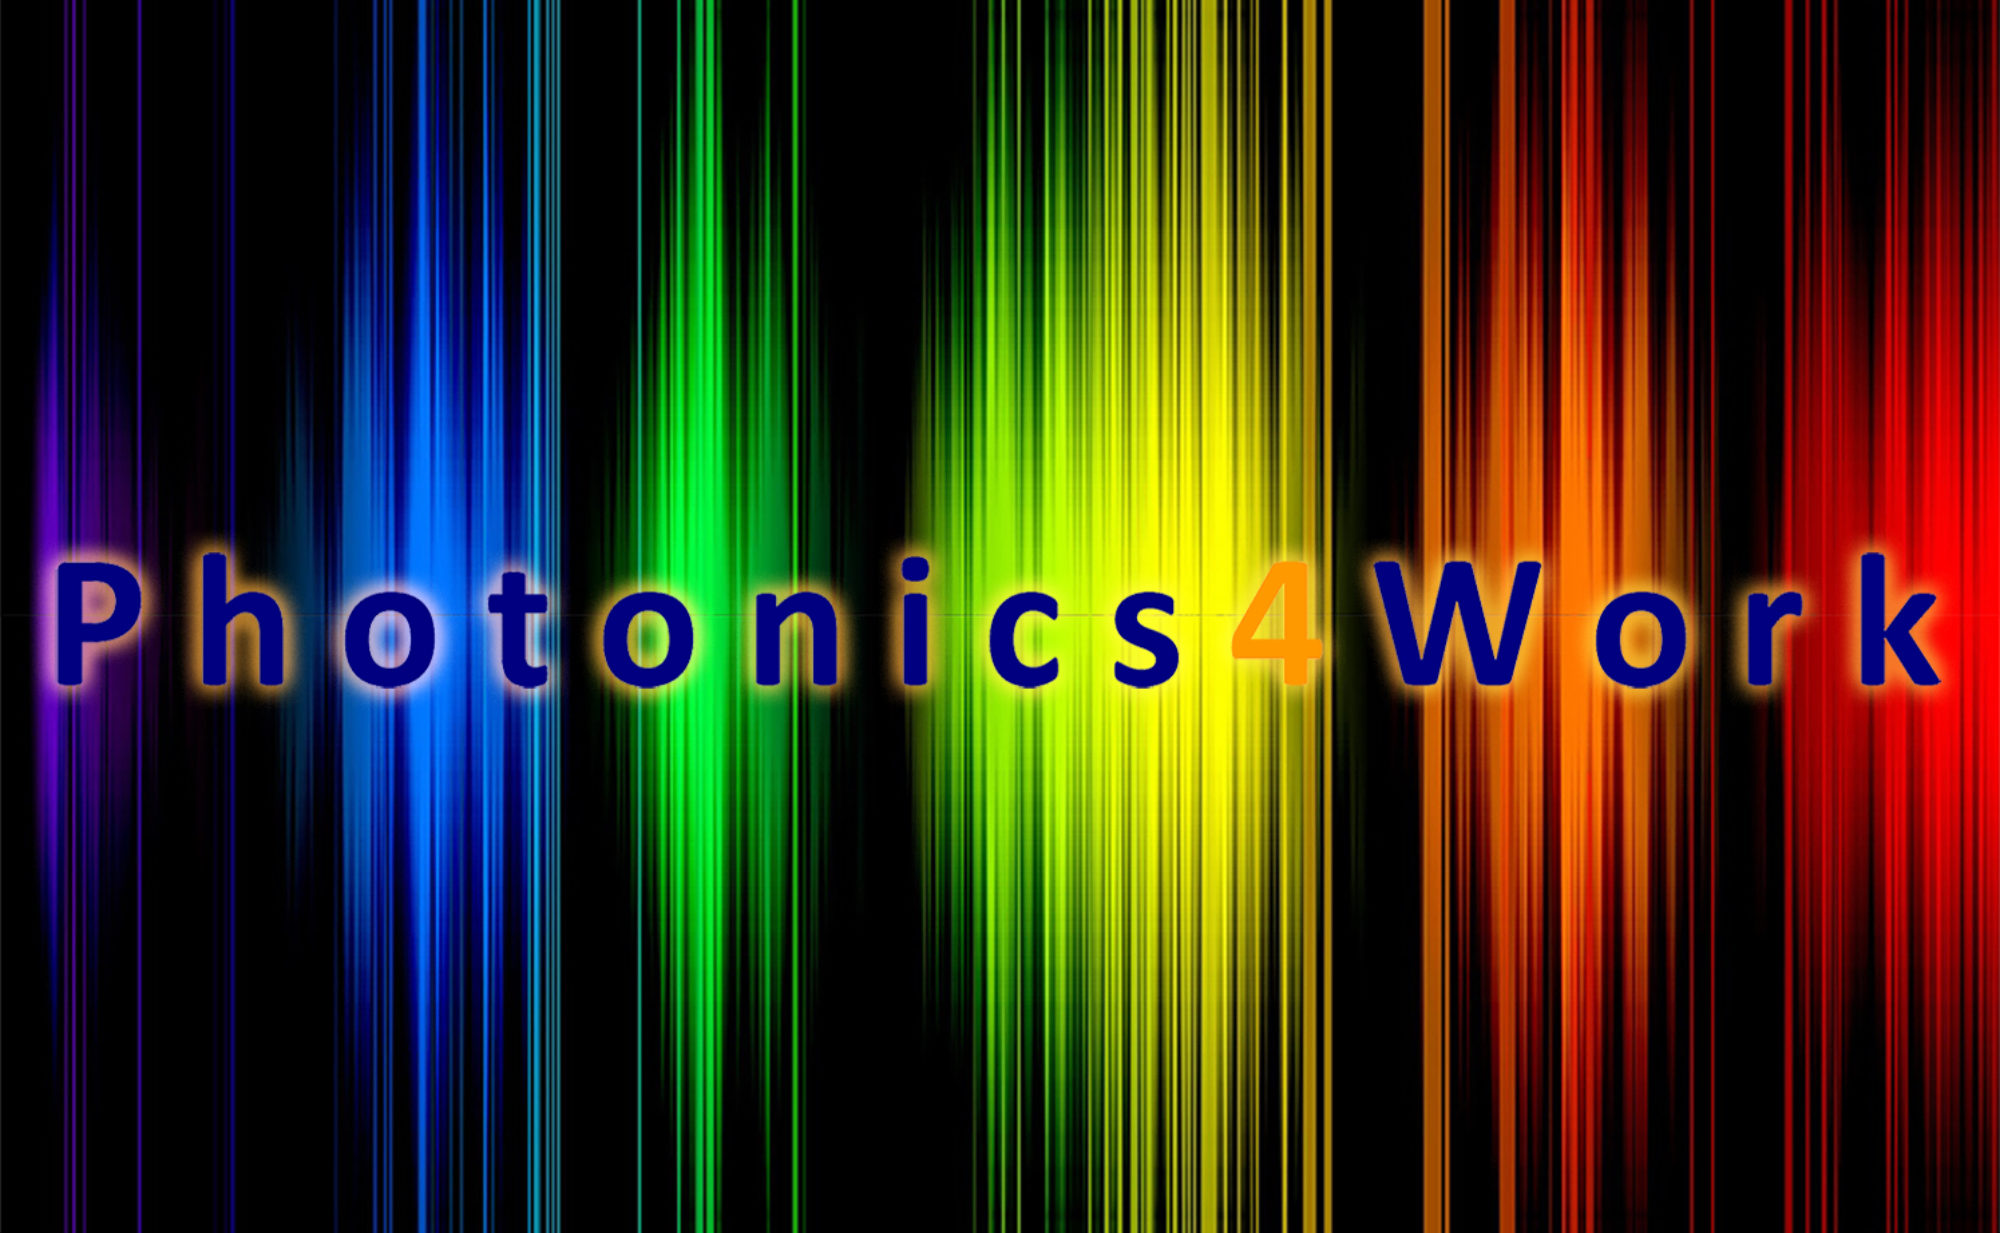 Photonics4Work